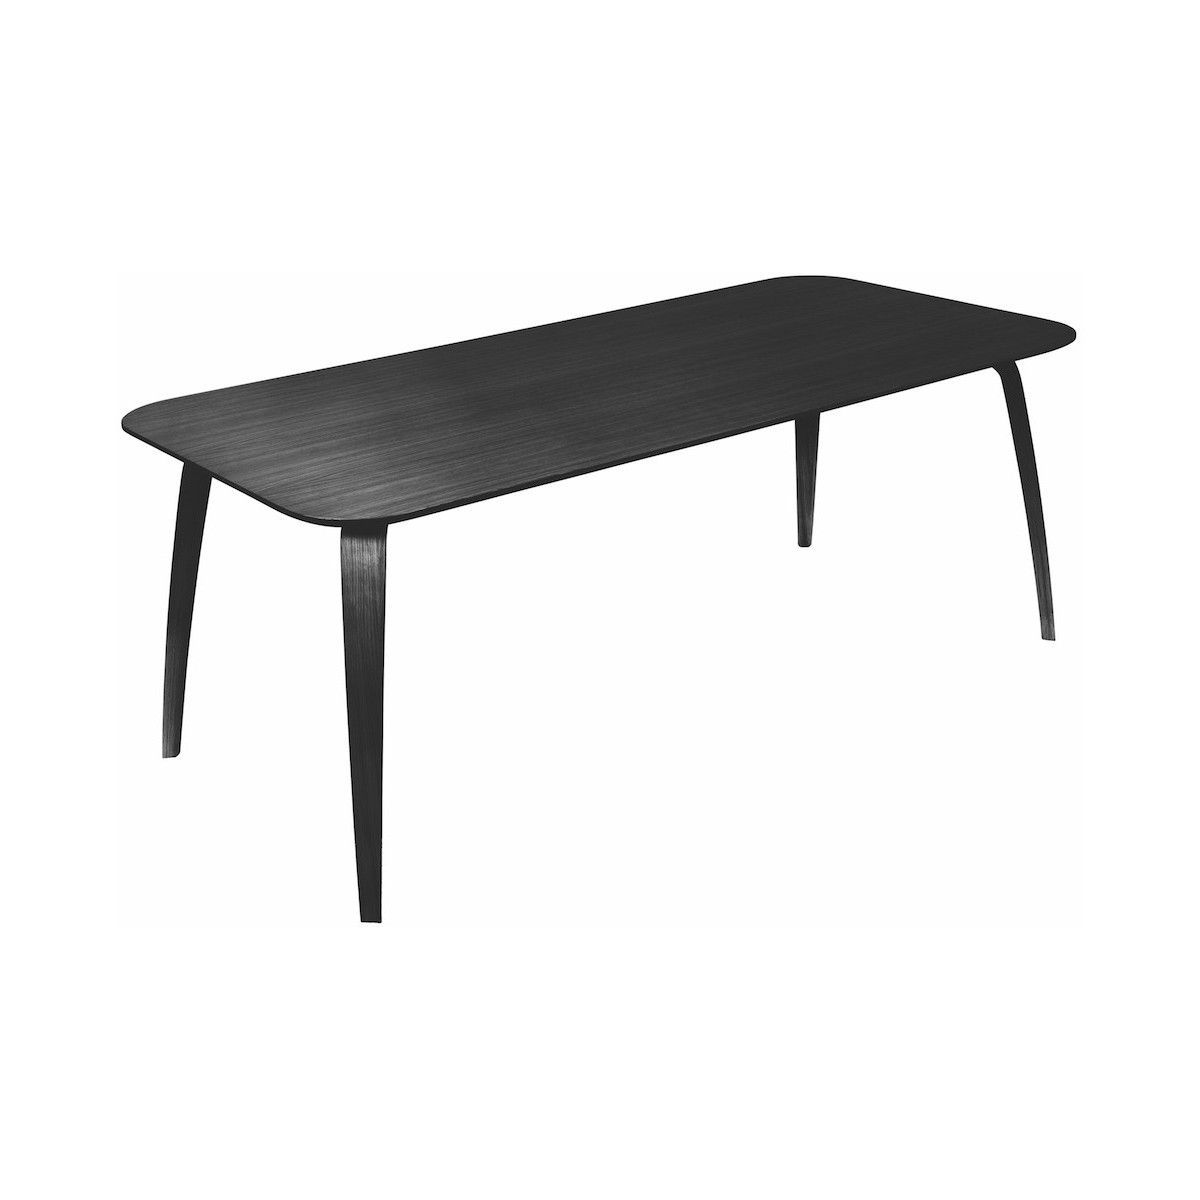 90x180cm - black stained ash - rectangular Gubi dining table